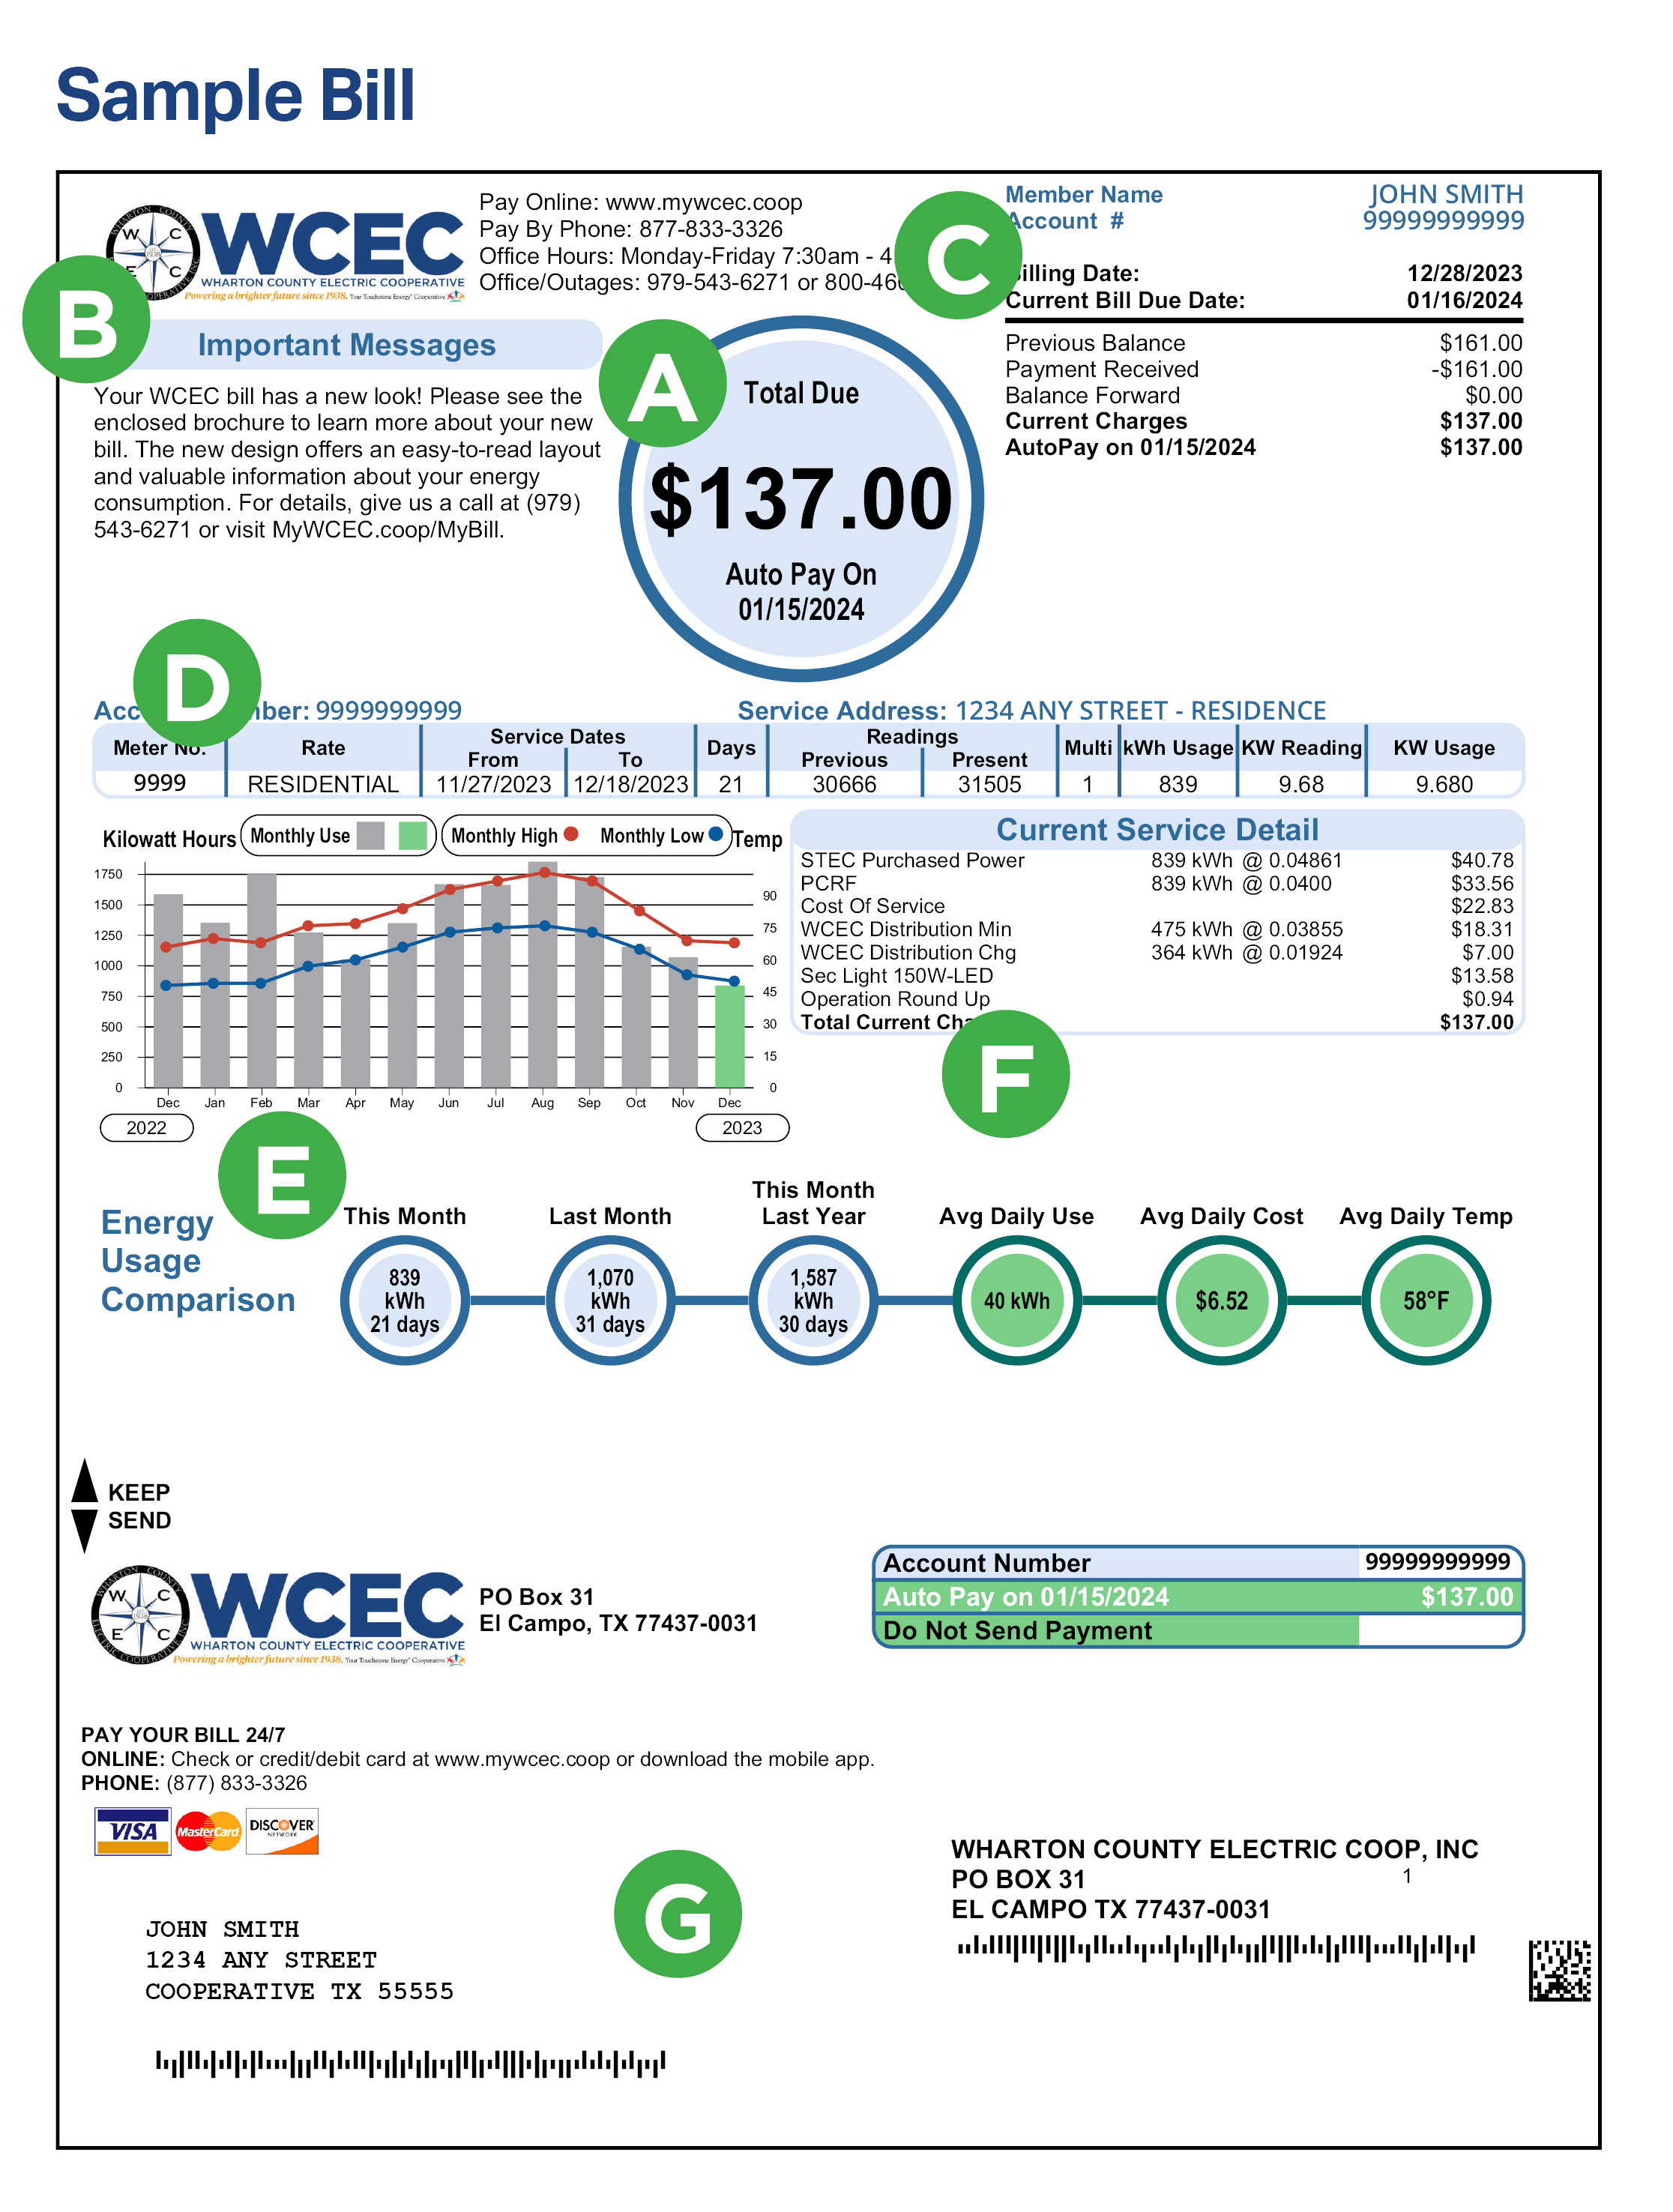 WCEC Electric Bill Sample